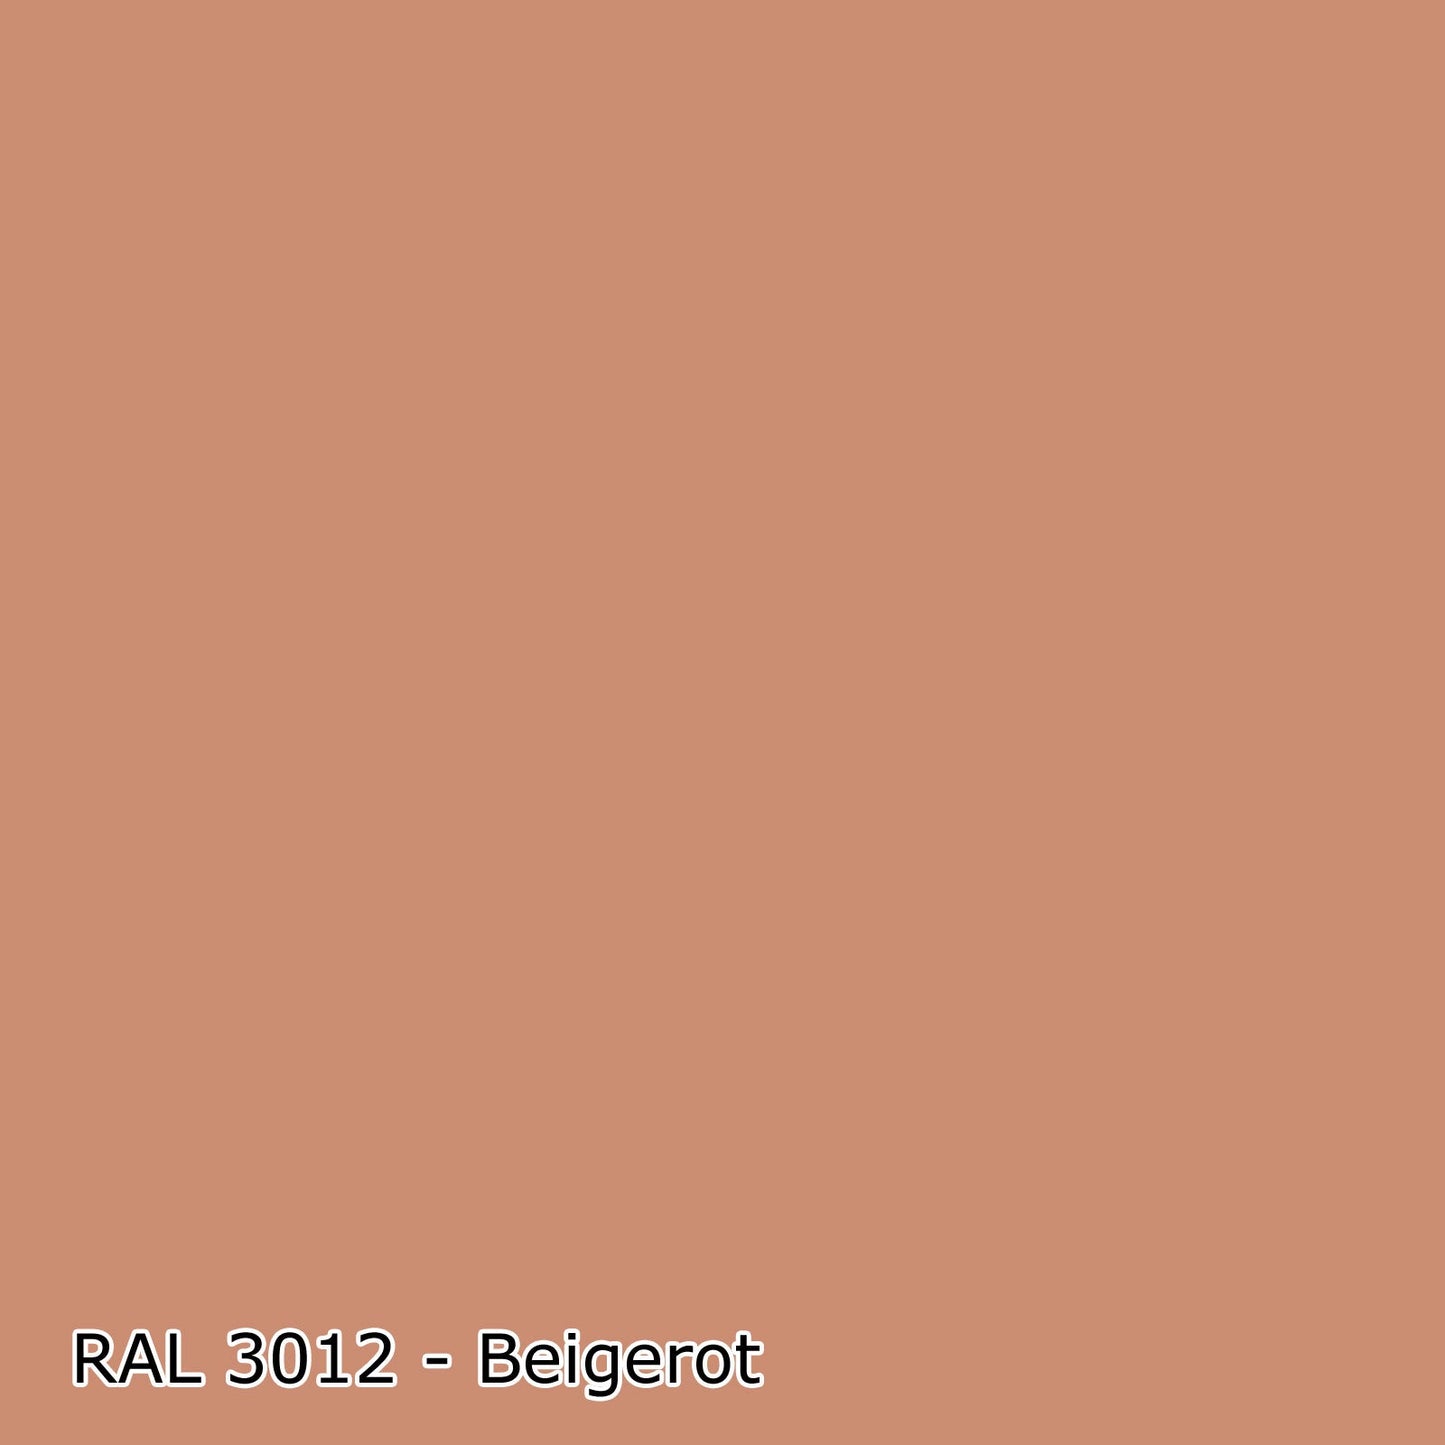 1 L Buntlack auf Wasserbasis, RAL Farbwahl - SEIDENGLANZ (RAL 1000 - 6007)